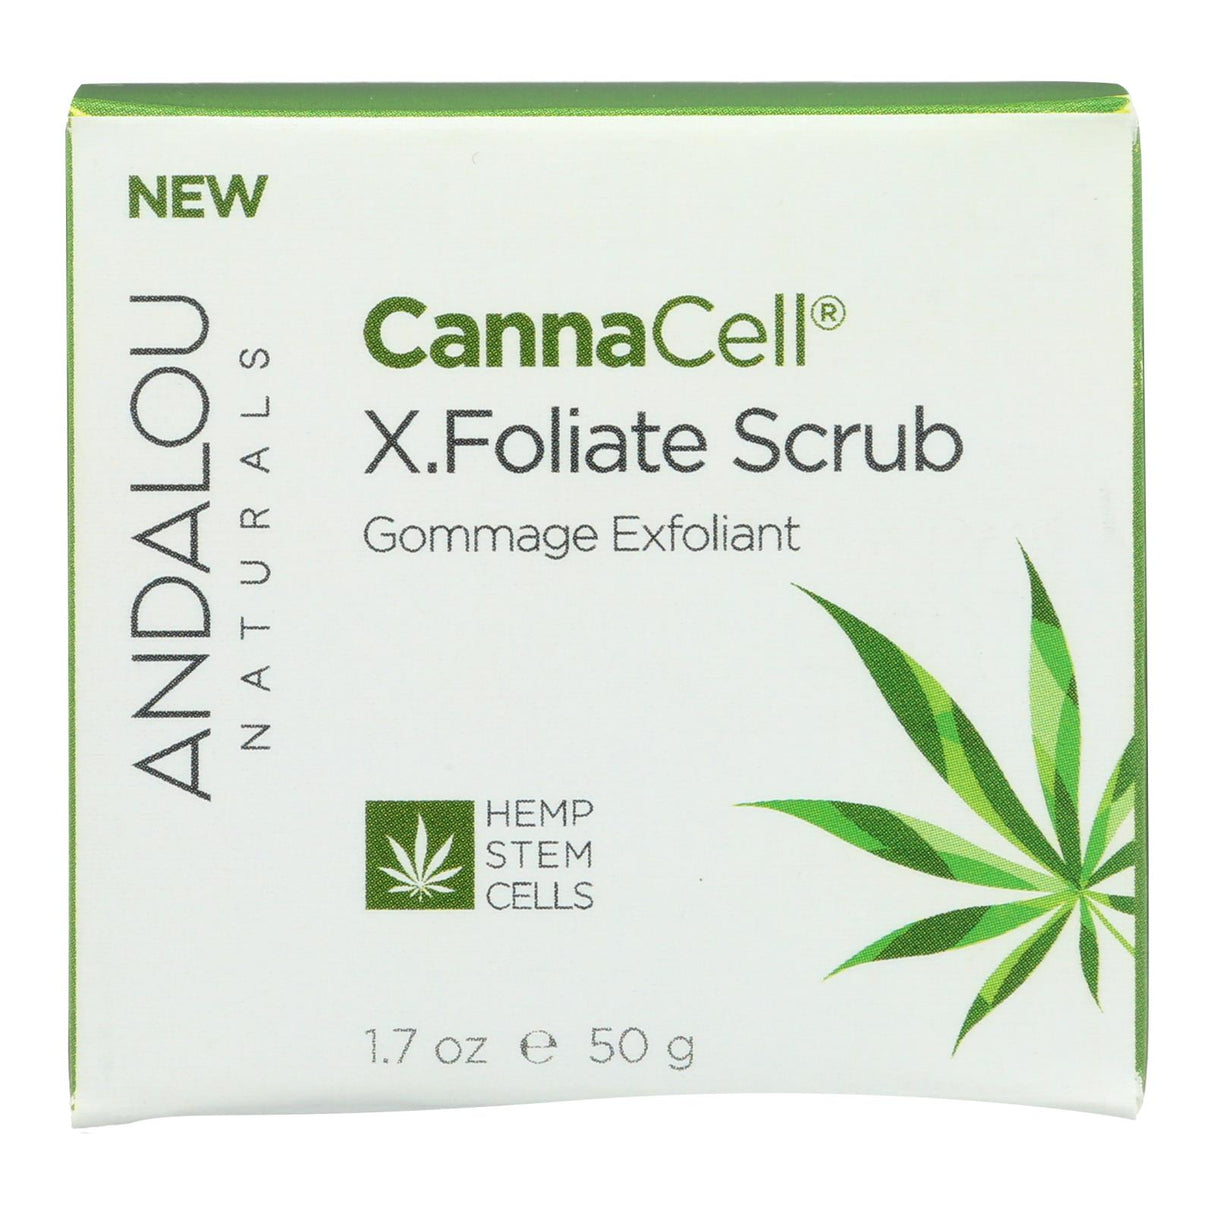 Andalou Naturals Cannacell Detoxifying X.foliate Scrub - 1.7 Oz - Cozy Farm 